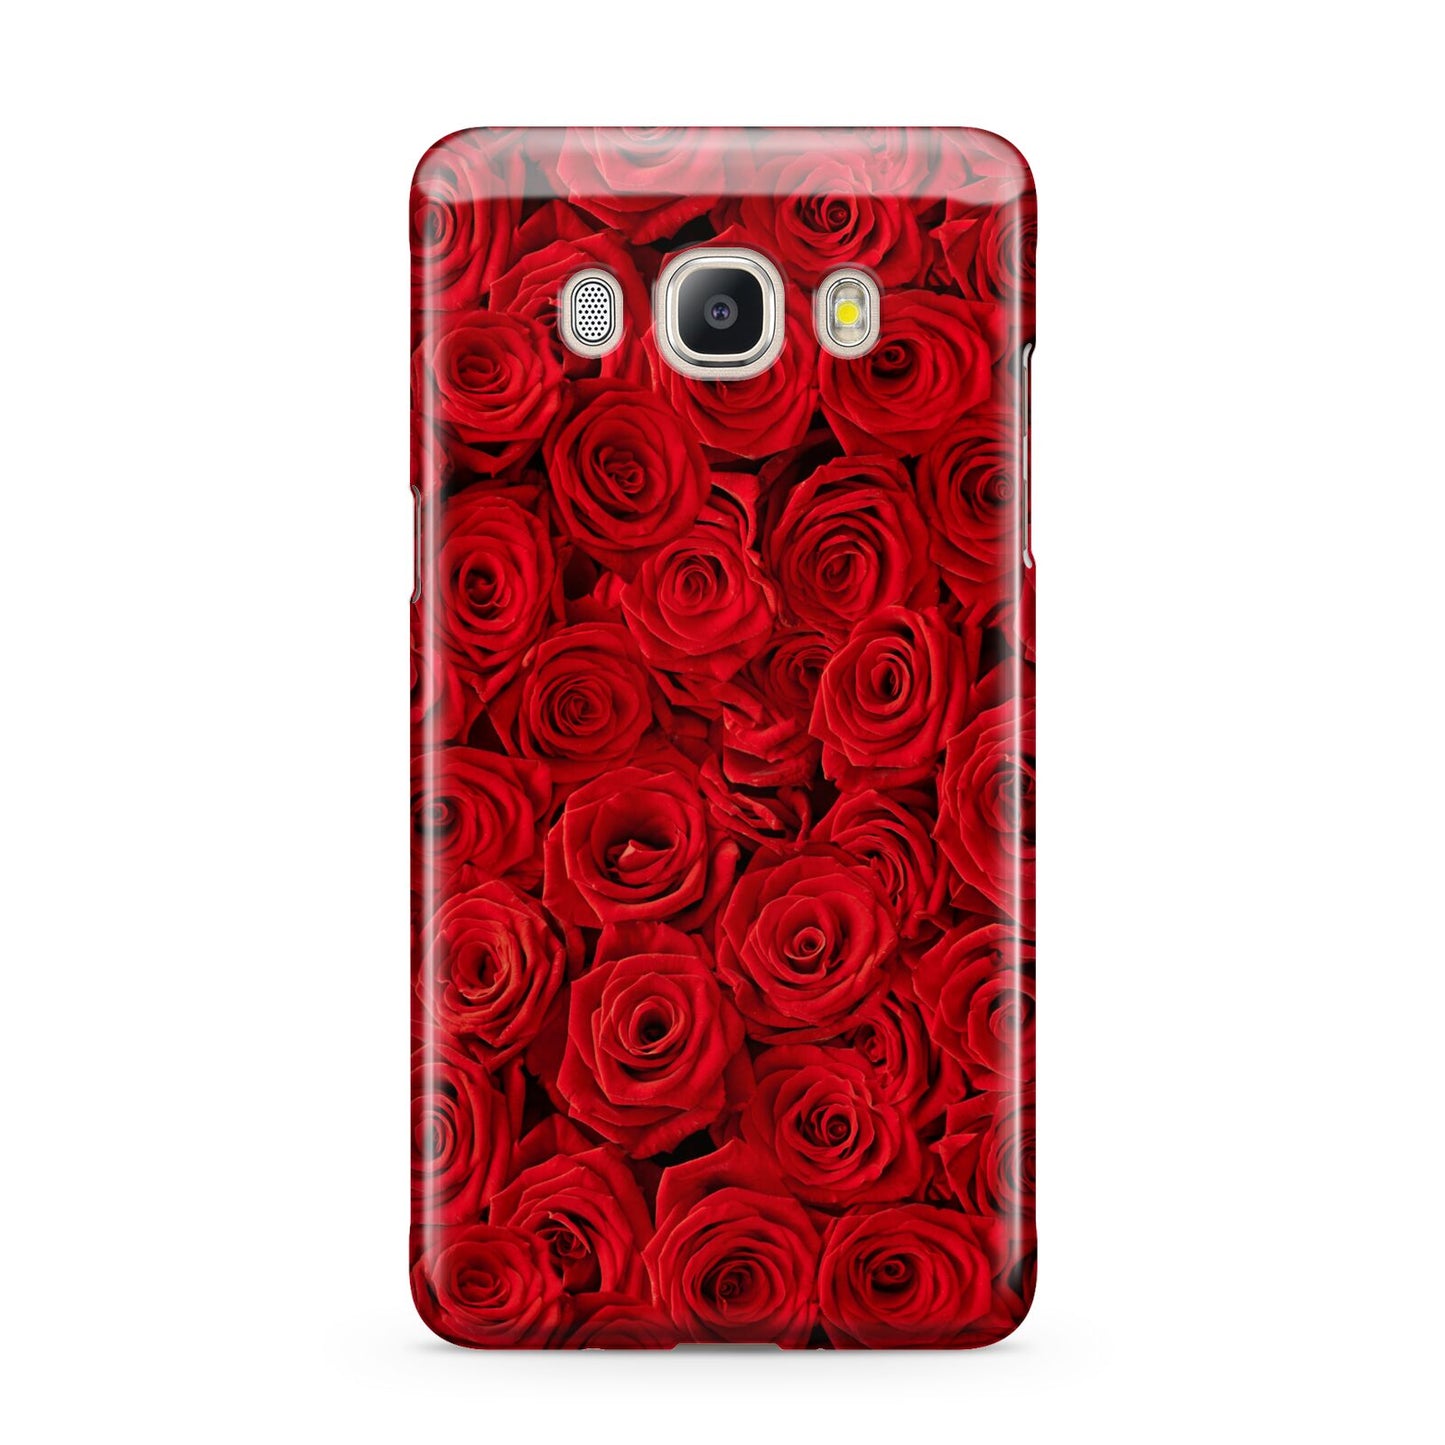 Red Rose Samsung Galaxy J5 2016 Case